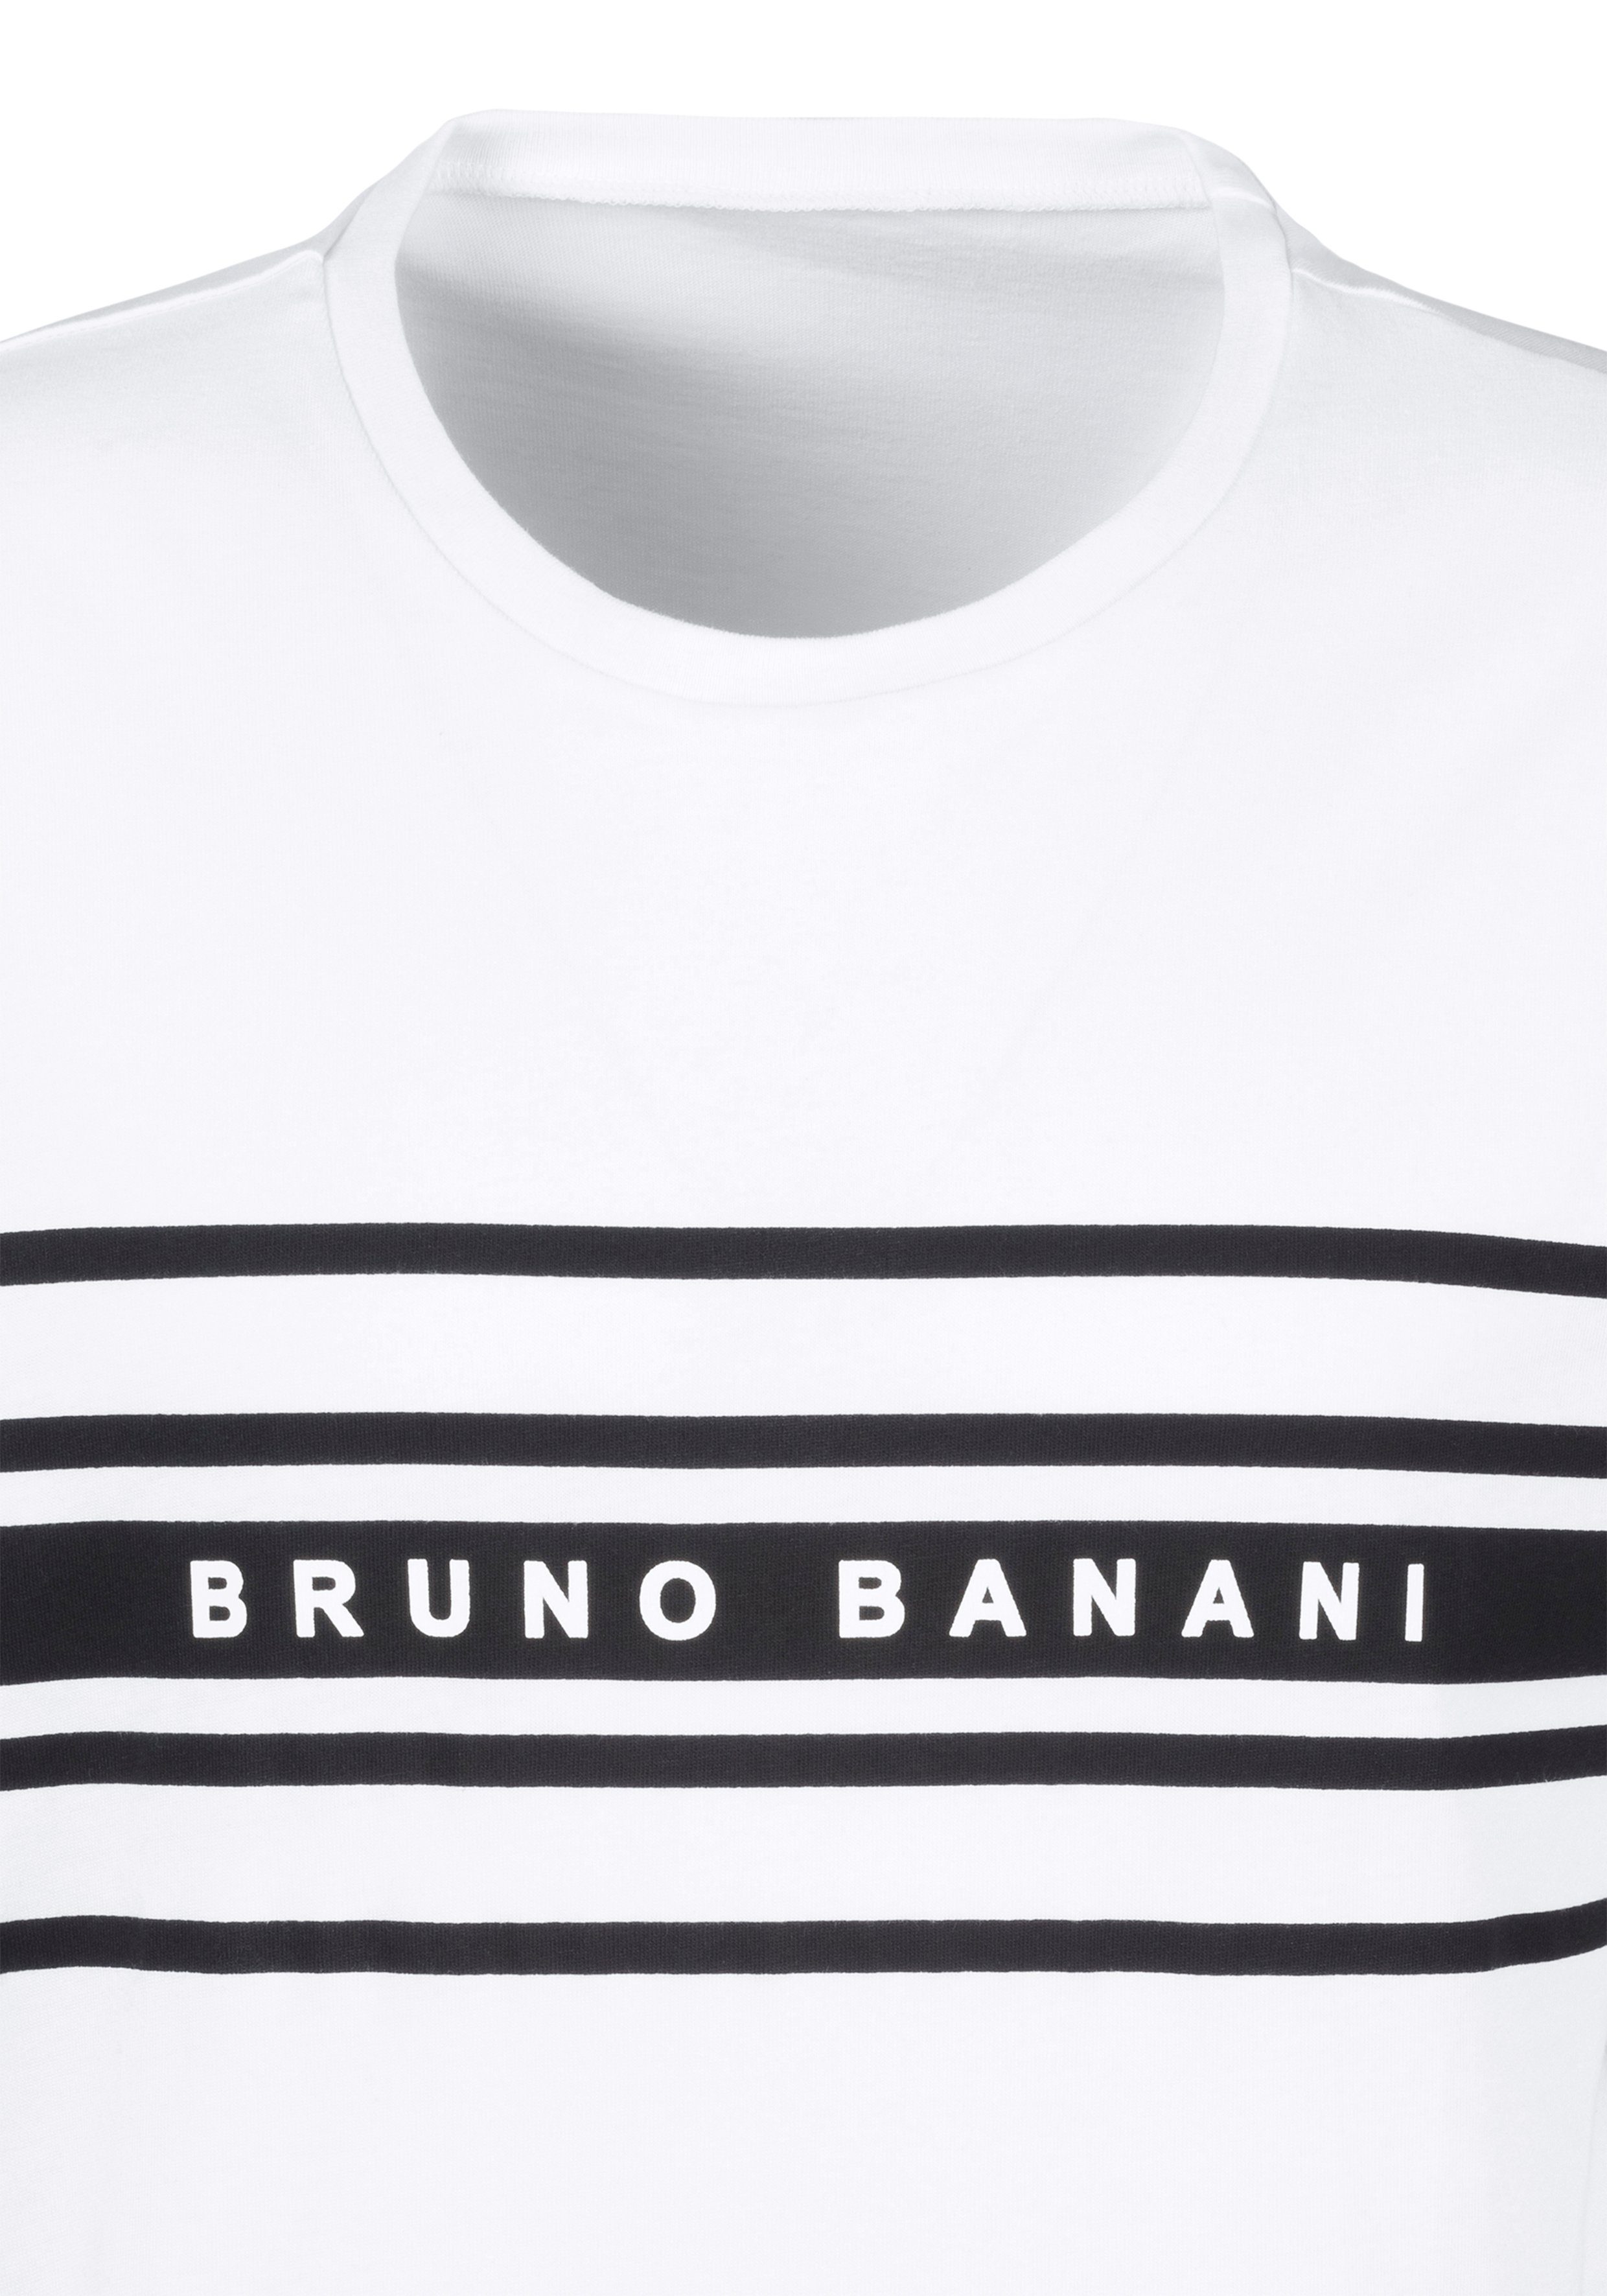 (2 1 mit tlg., Shorty Bruno Logodruck Banani Stück)